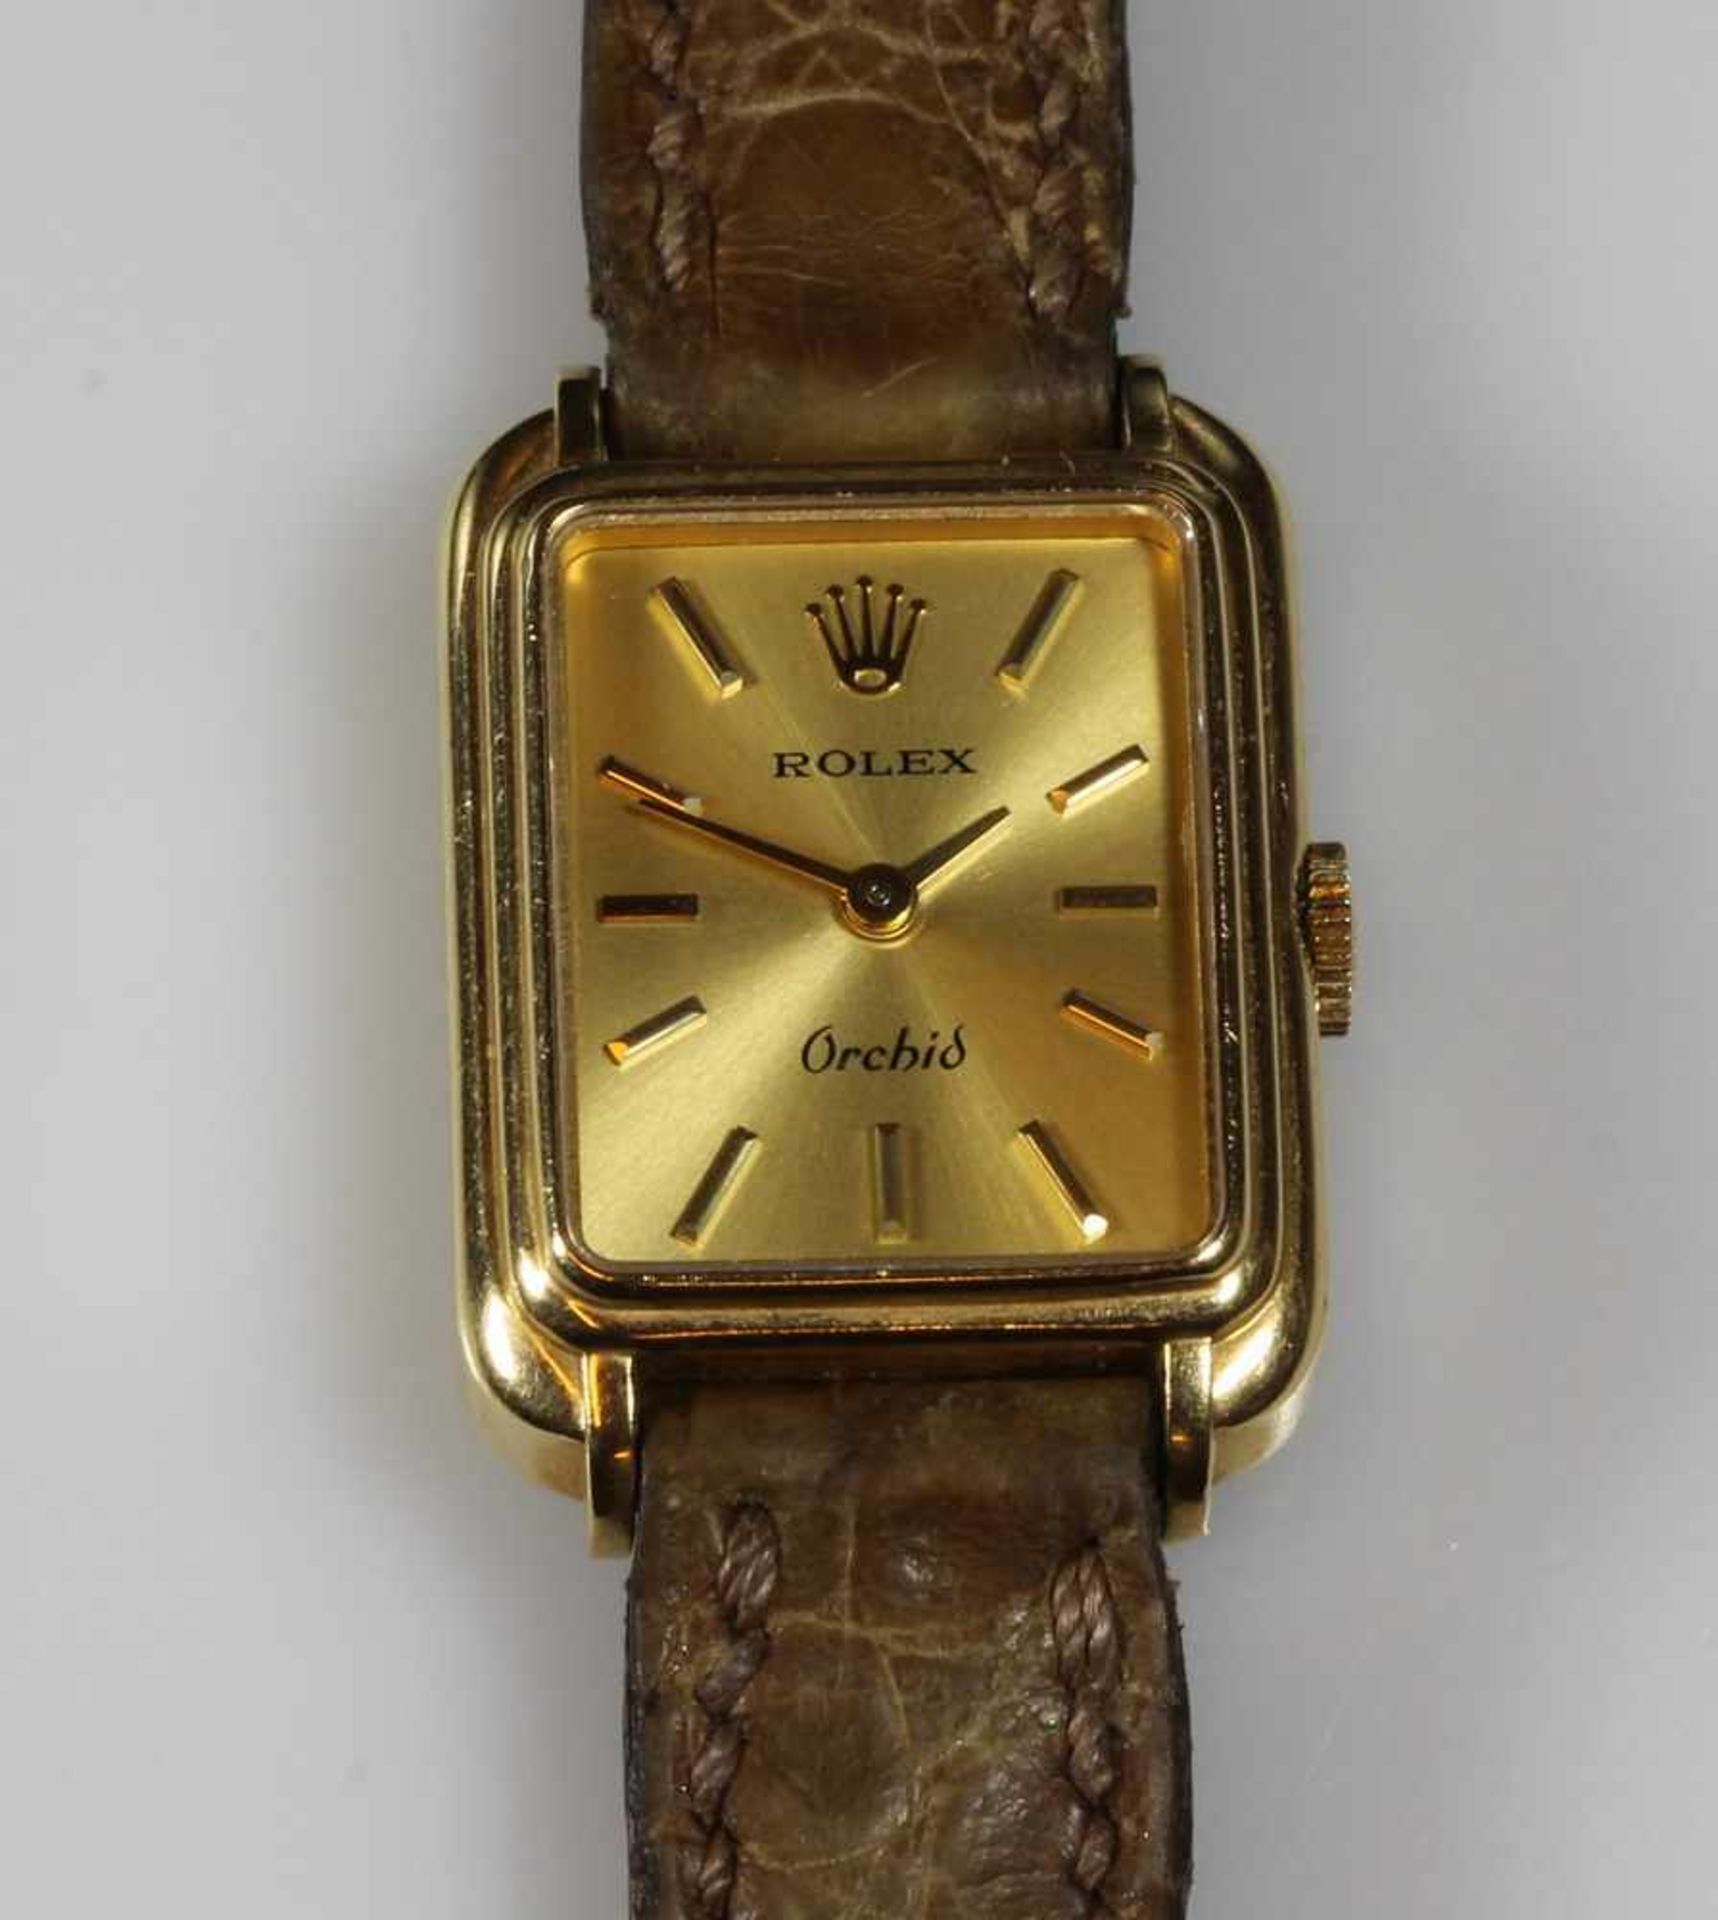 Damenarmbanduhr, Rolex, Model Orchid, 1950er/60er Jahrem GG 750, Gehäuse-Nr. 4257933, goldfarbenes